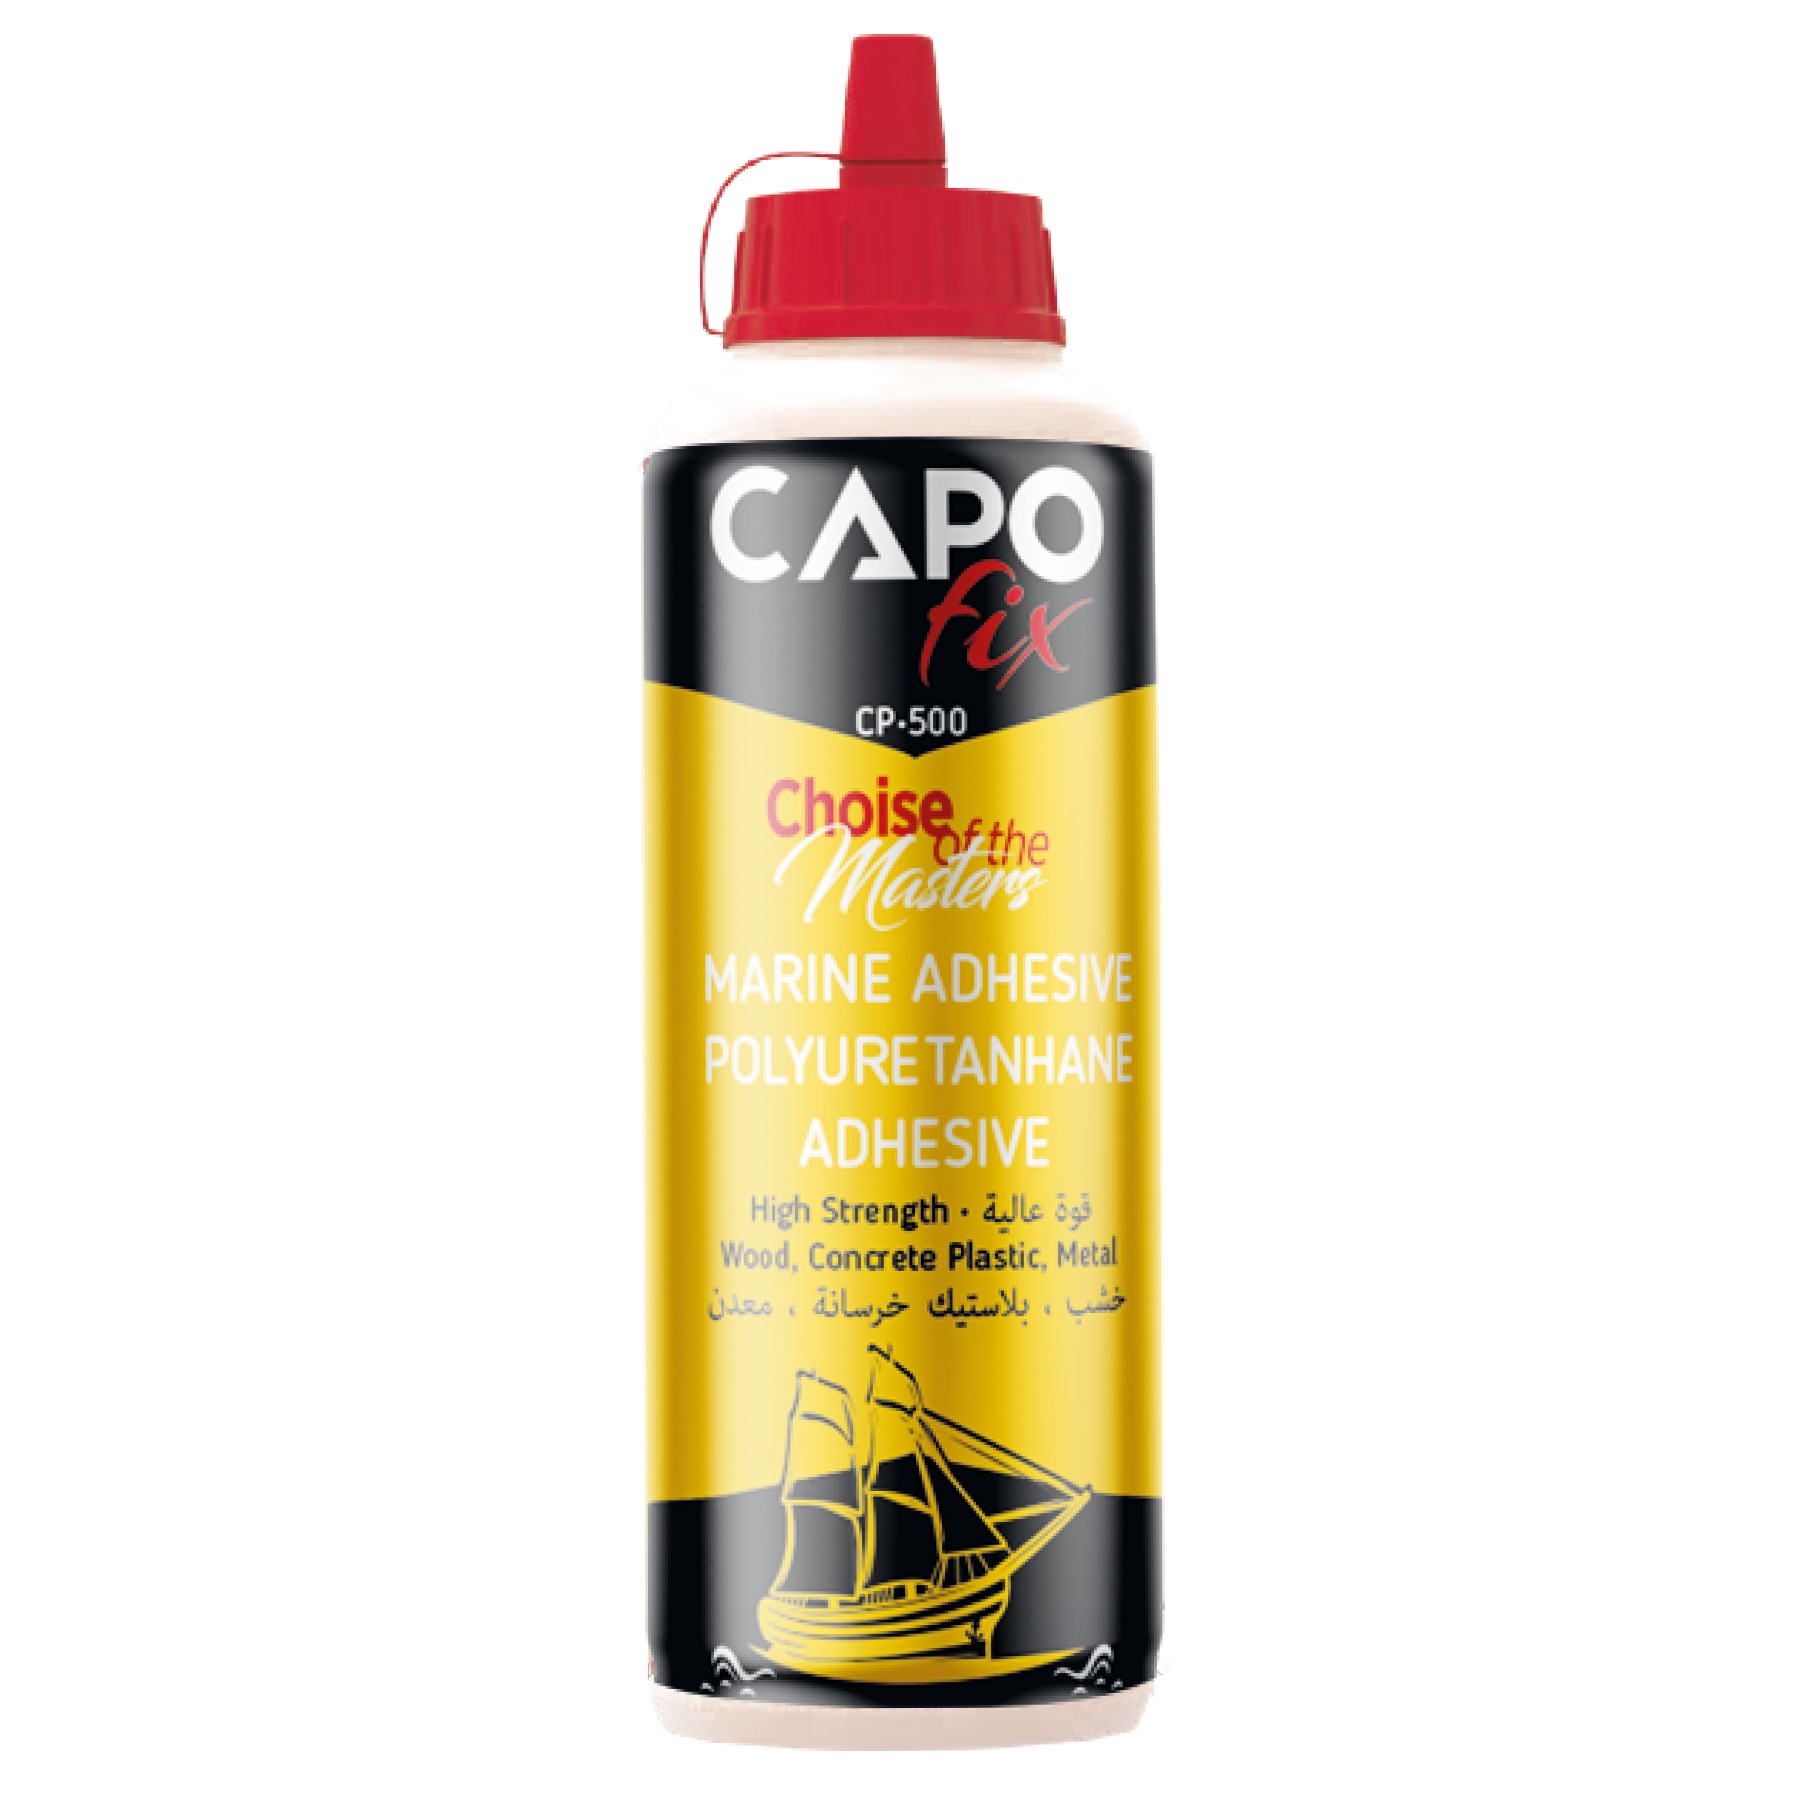 .CAPO fix Marine Adhesive.